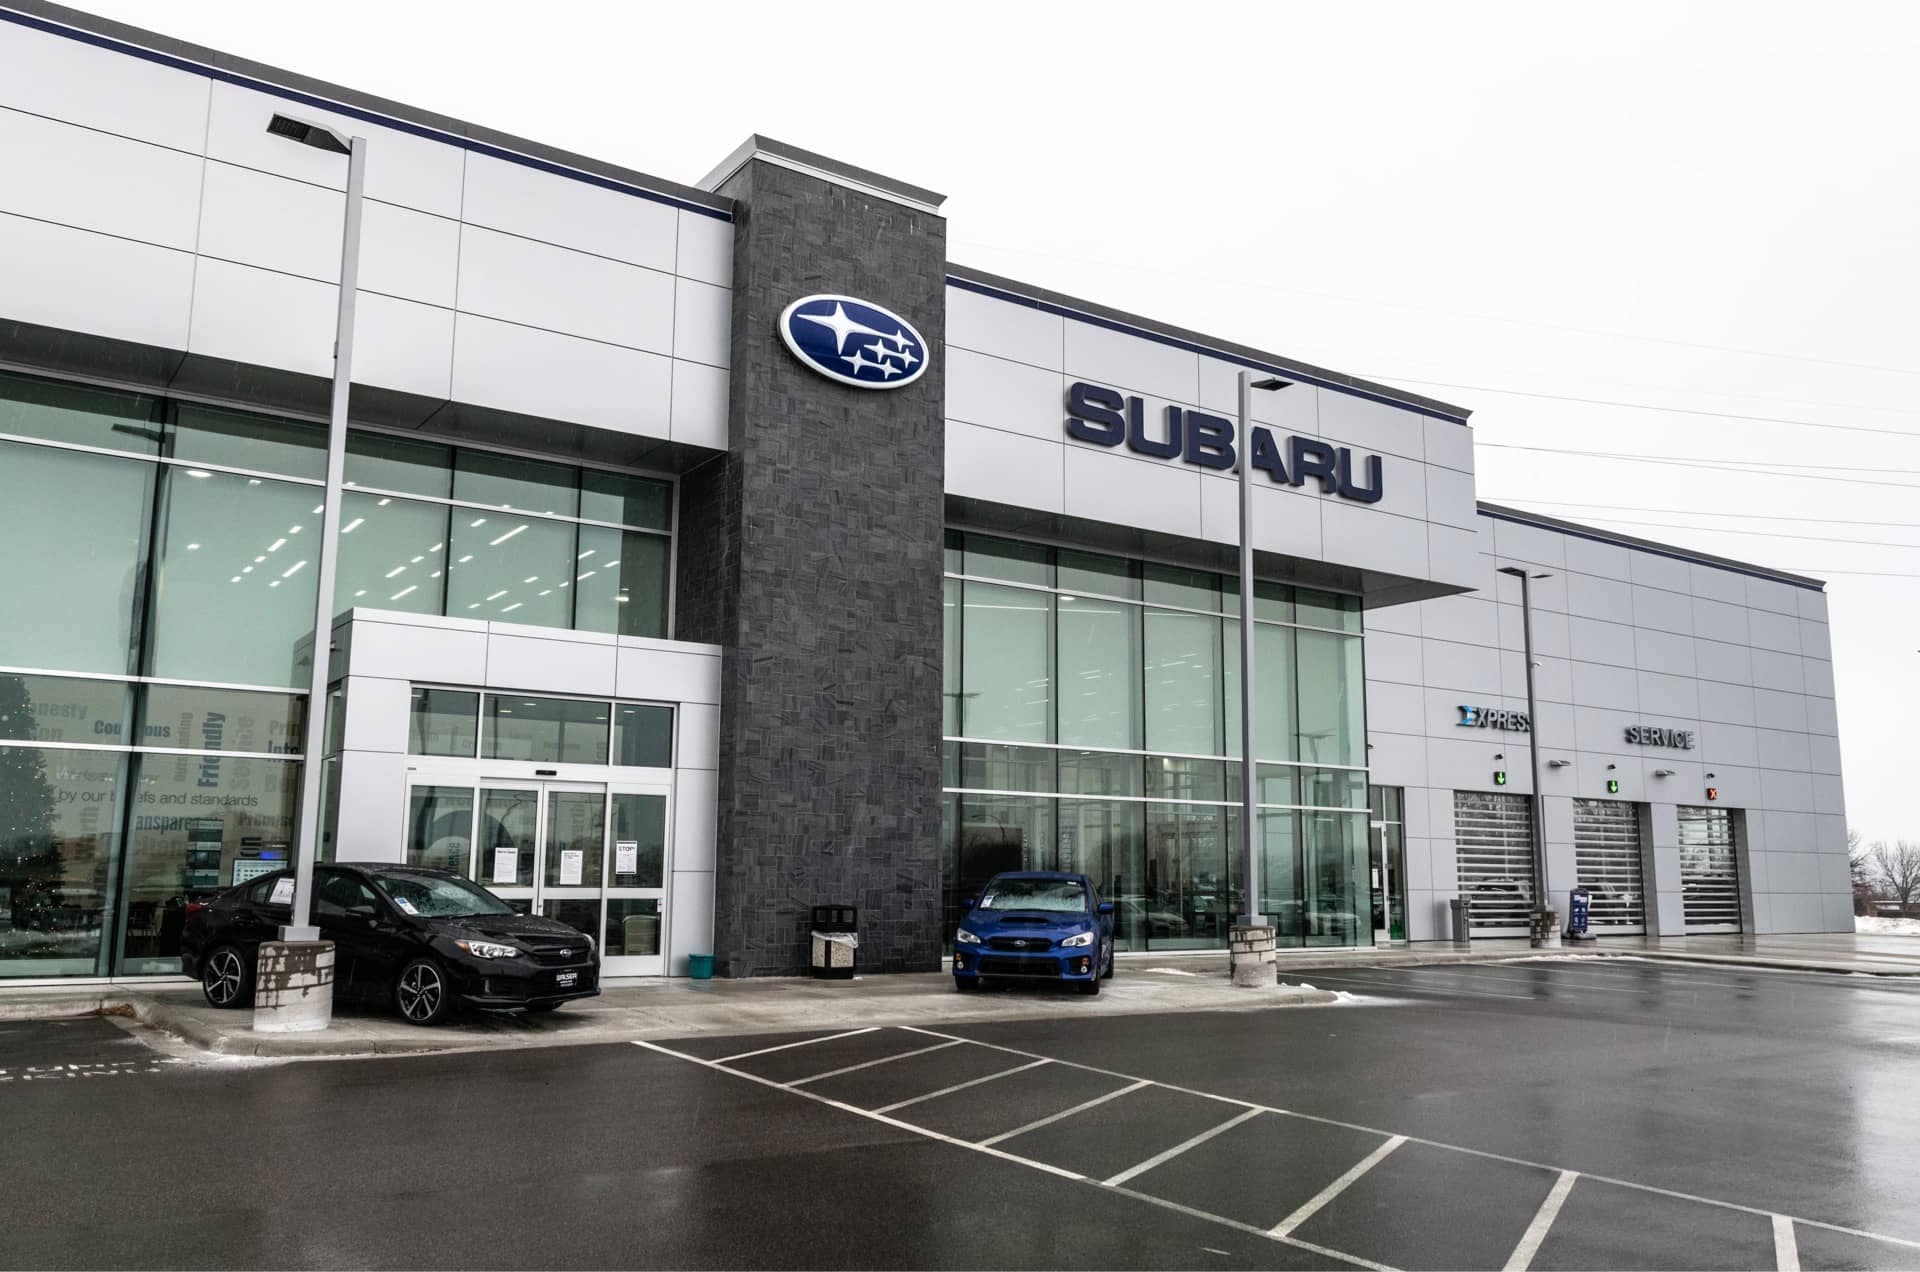 Subaru dealership exterior